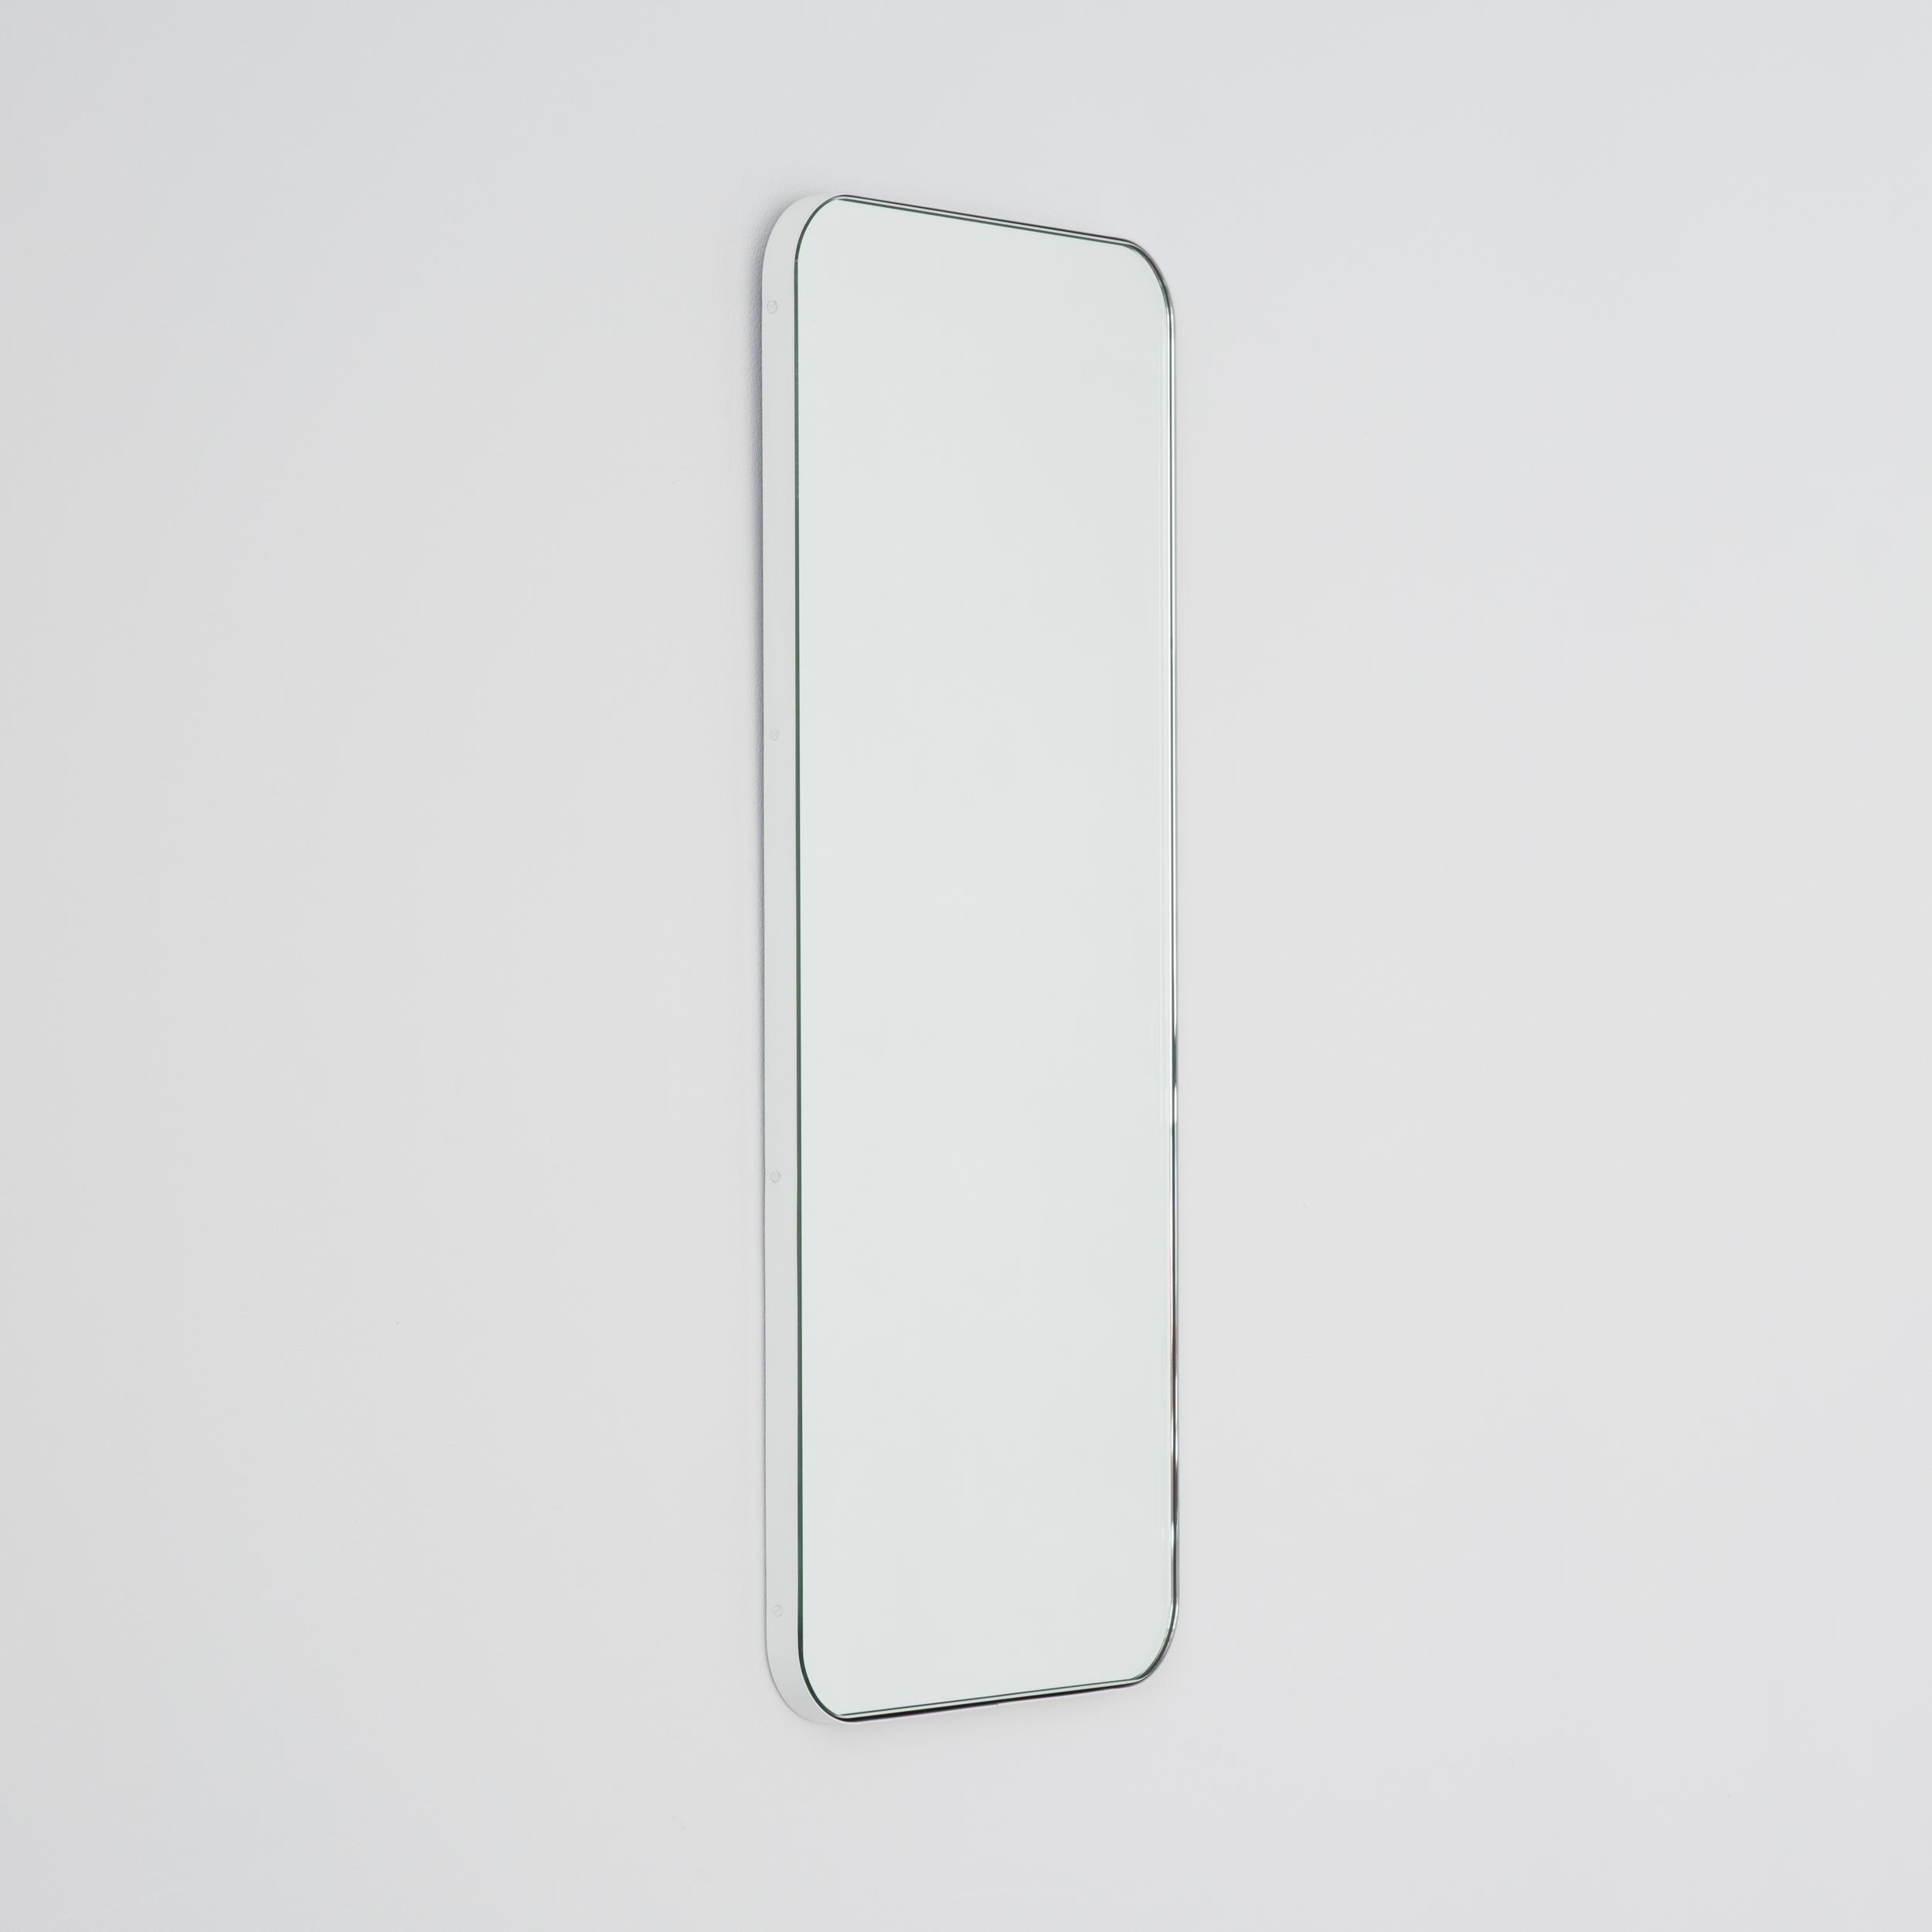 Quadris Rectangular Minimalist Mirror with White Aluminium Frame, Large In New Condition For Sale In London, GB